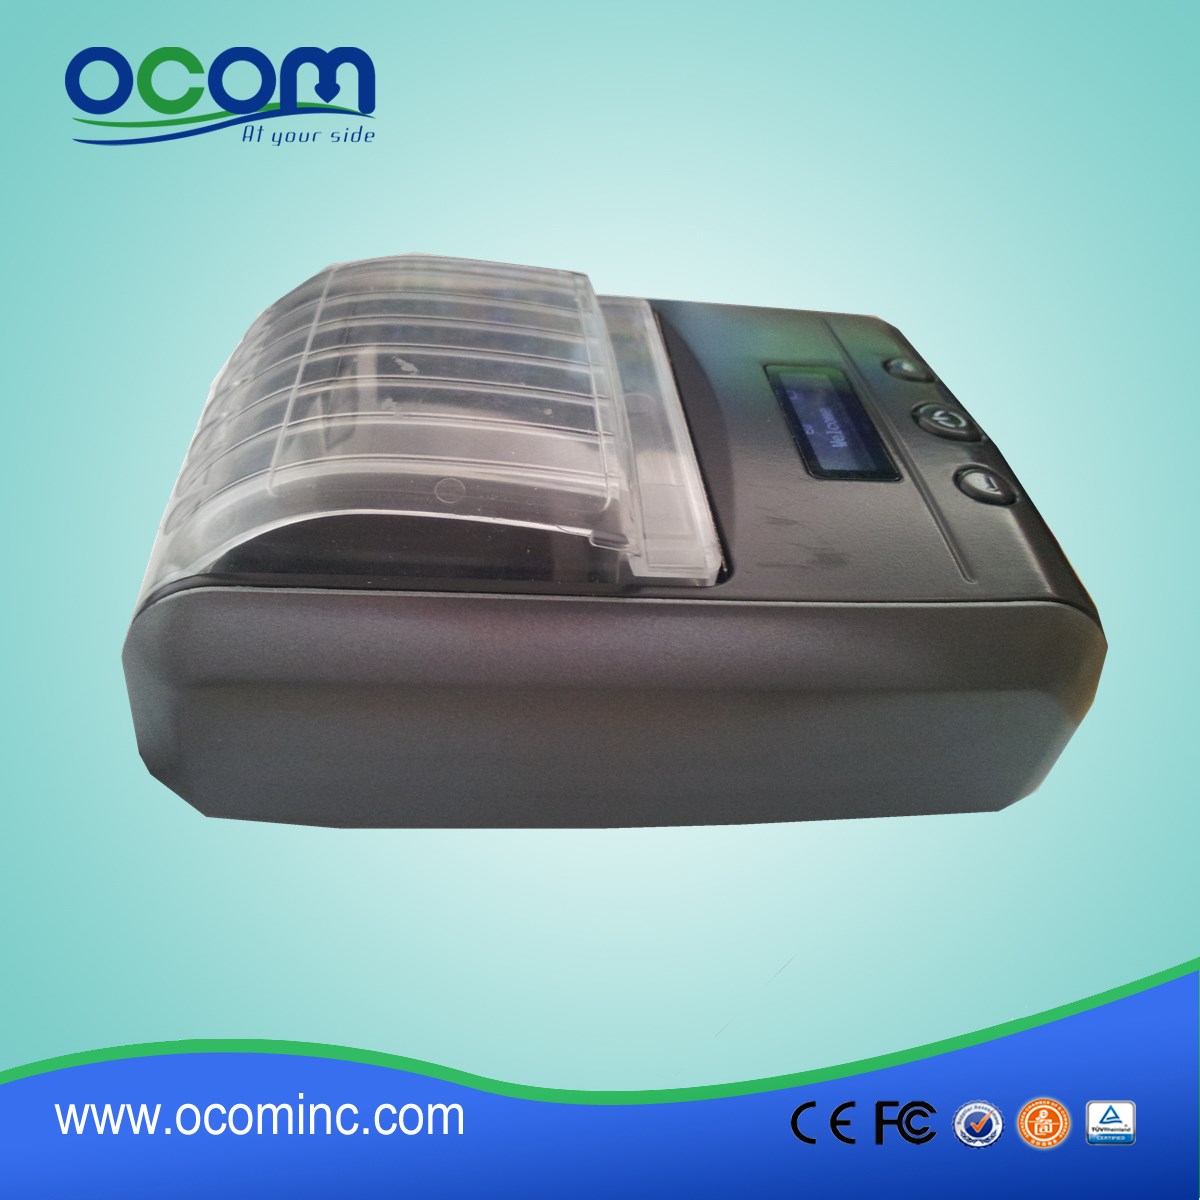 58mm impresora portátil de etiquetas térmicas --OCBP-M58